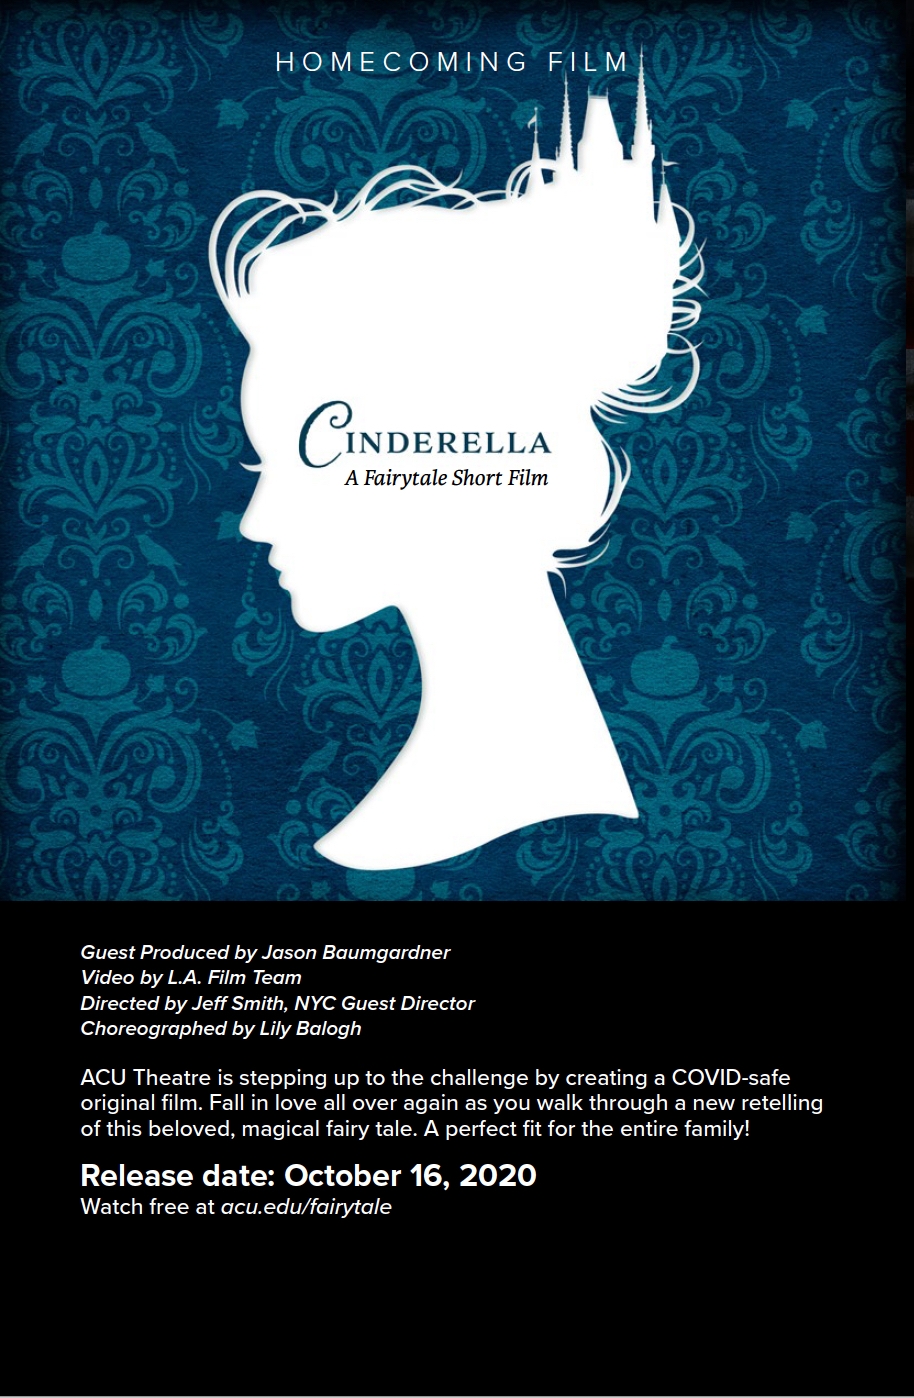 Cinderella Poster